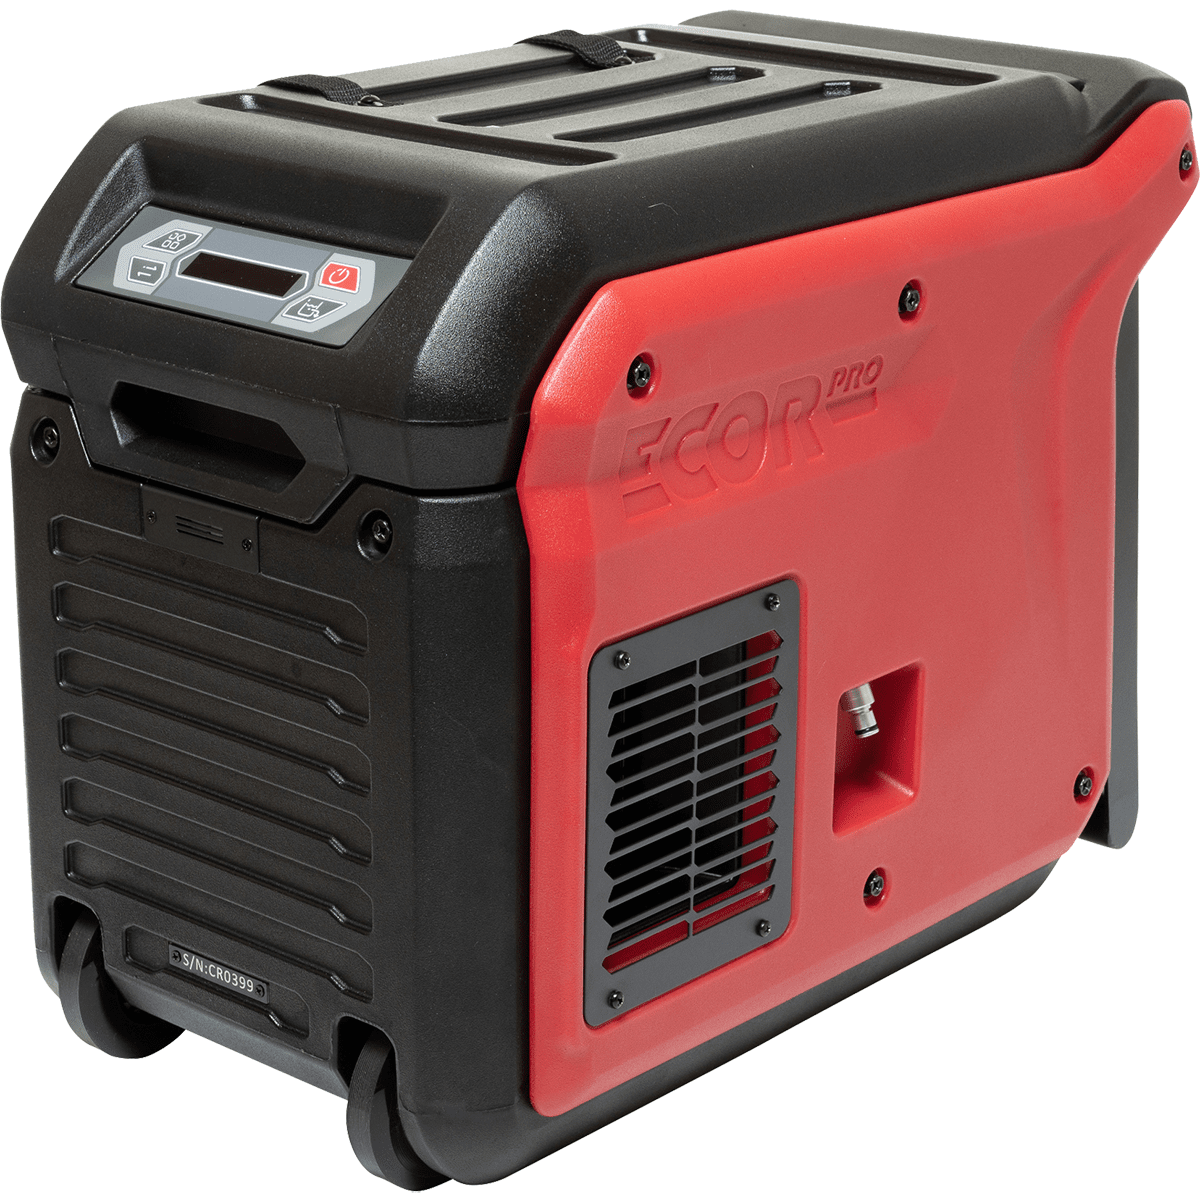 Ecor Pro 170LGR Low Grain Refrigerant Dehumidifier w/ Pump - Red